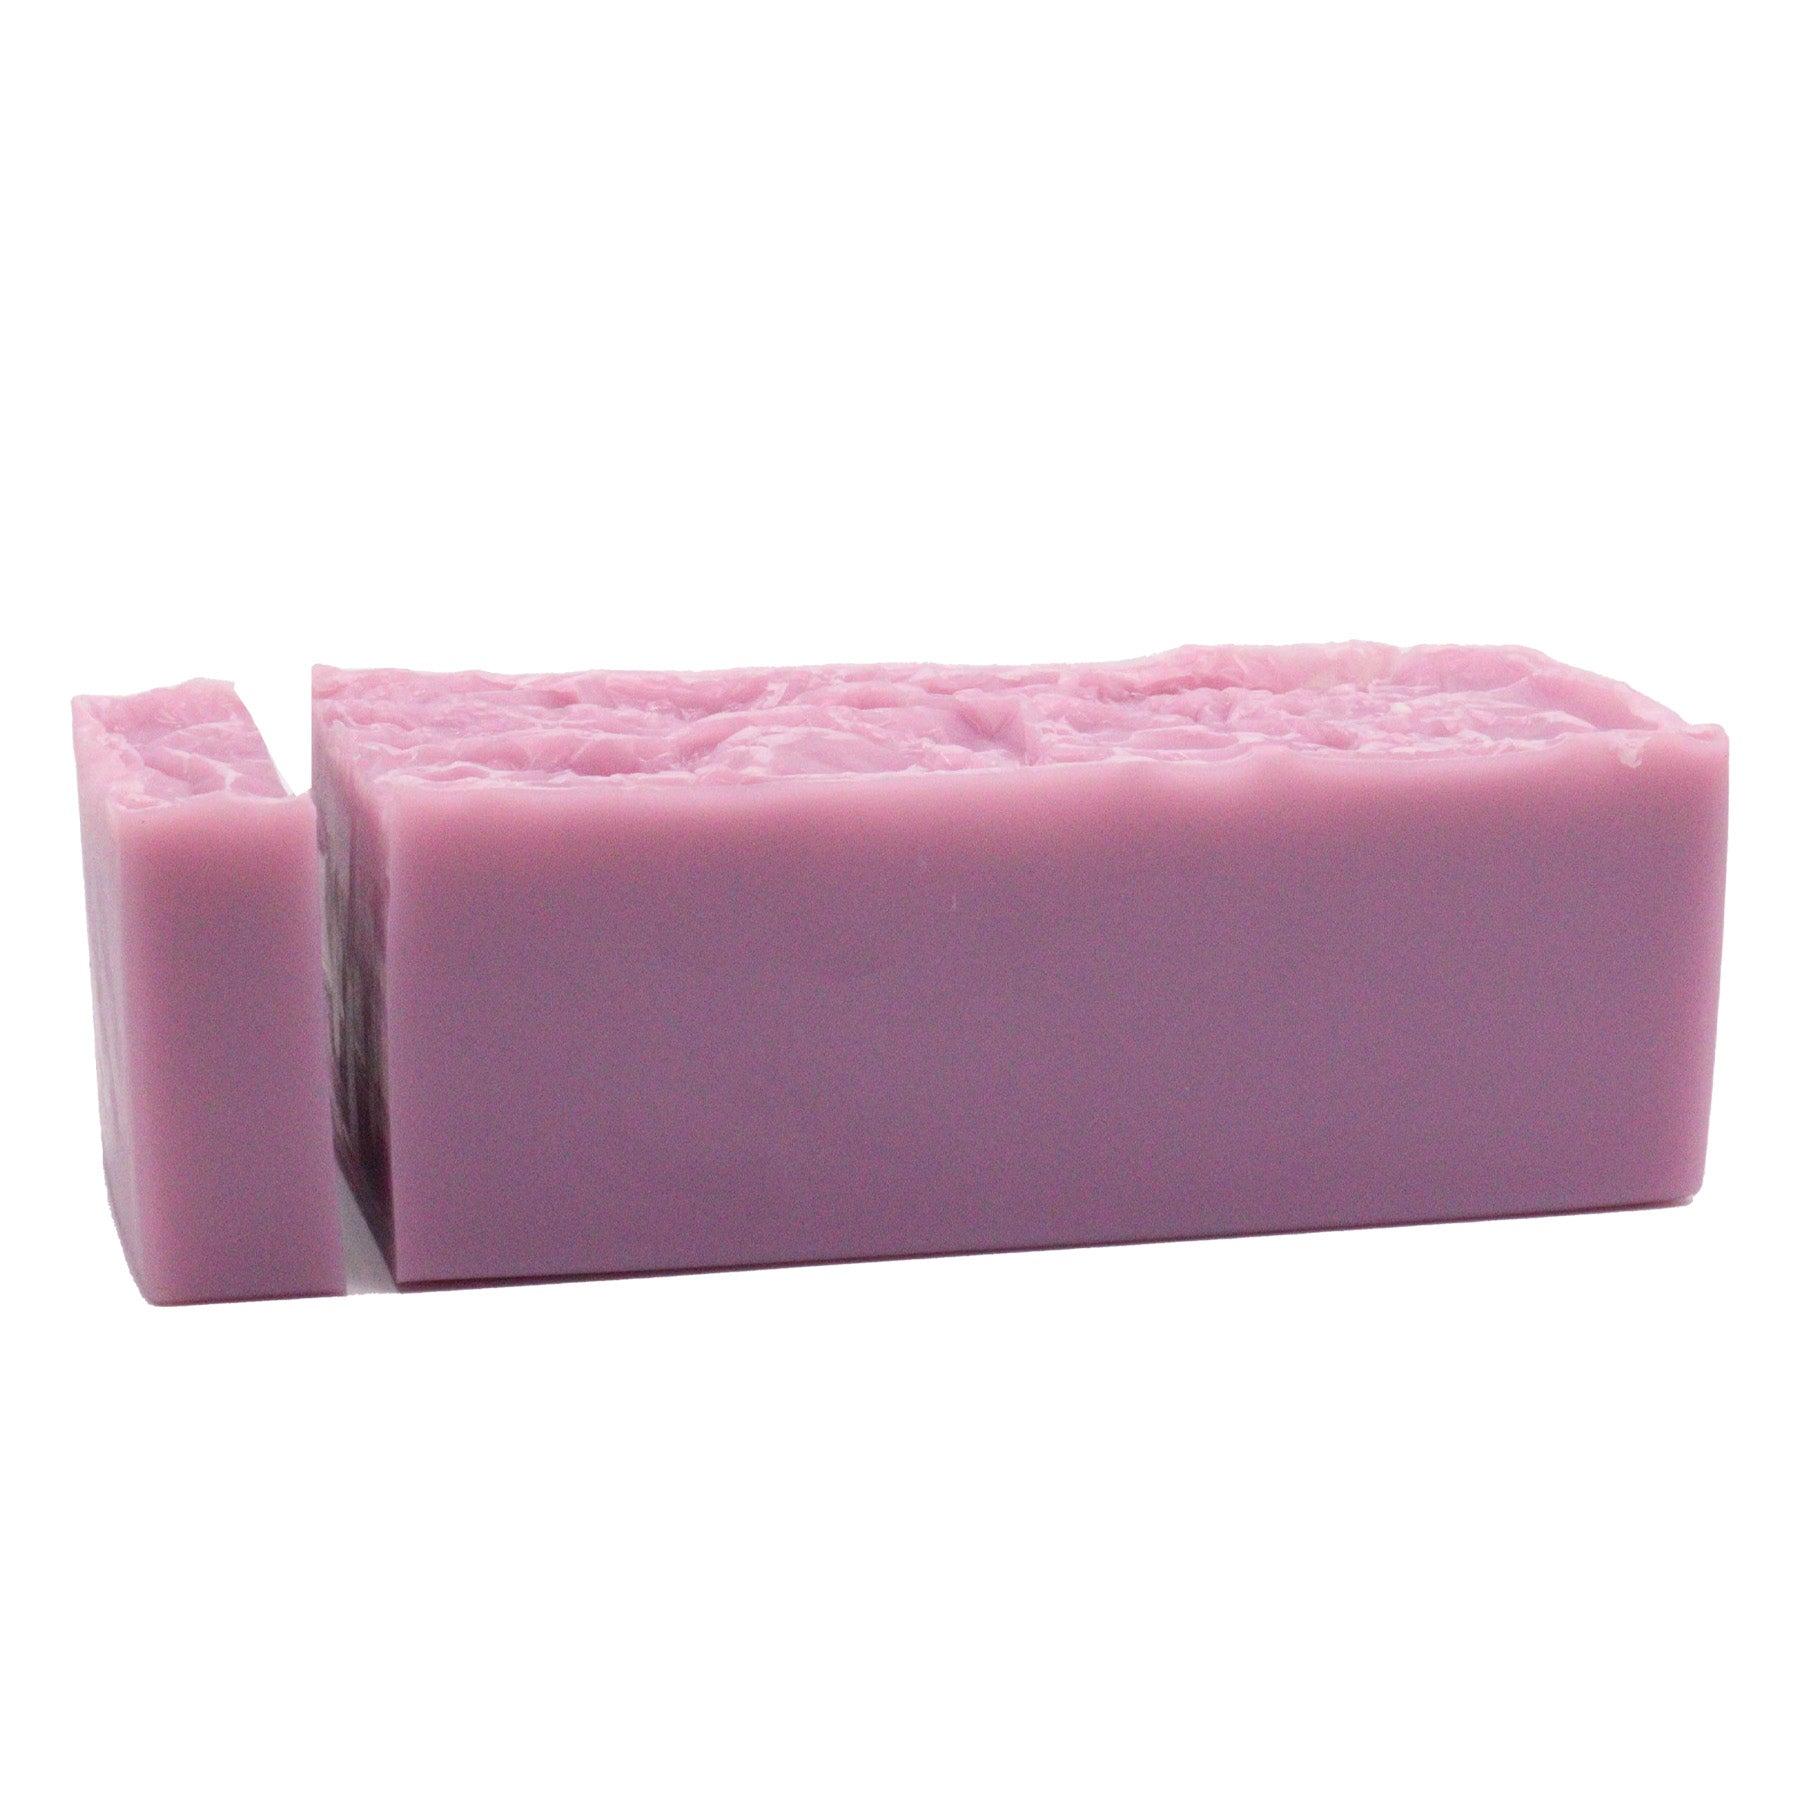 View Lavender Serenity Soap Loaf information